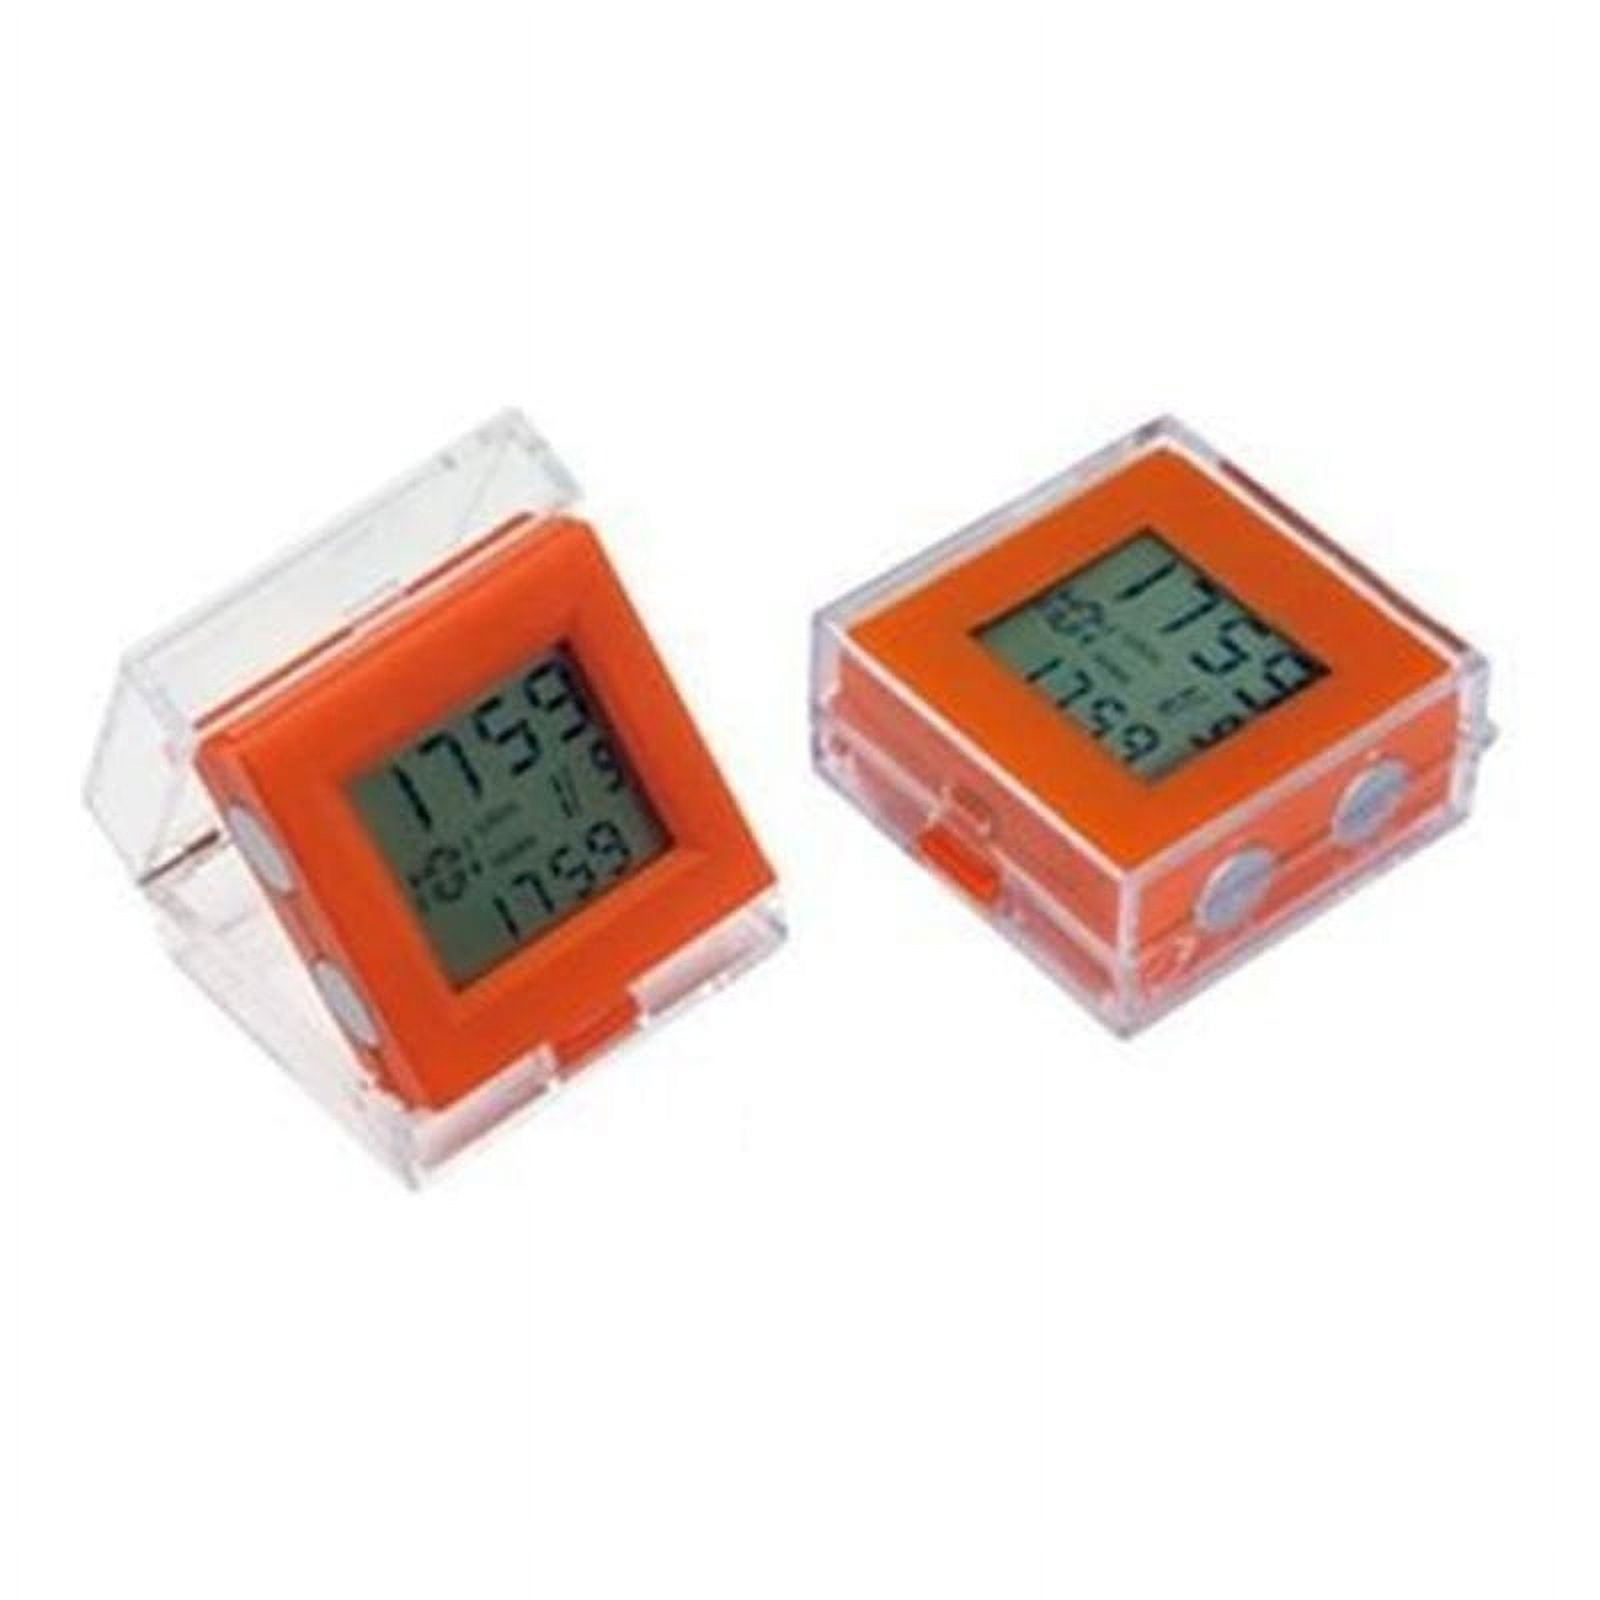 Picture of Jiallo 11708 Dual Time Alarm Clock&#44; Orange